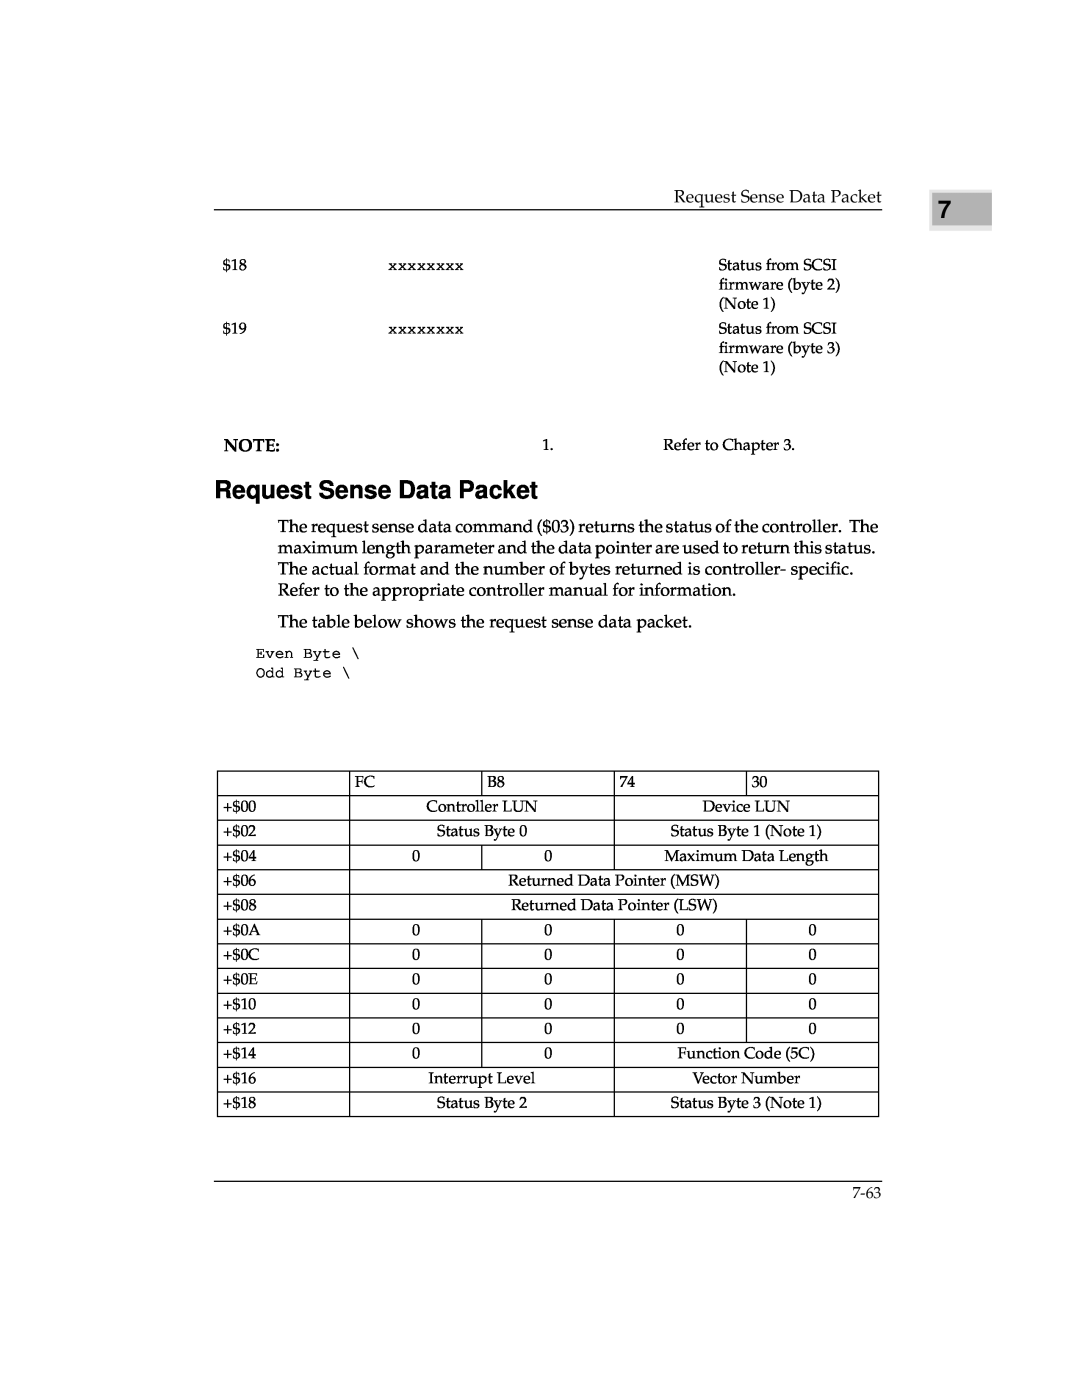 Emerson MVME147 manual Request Sense Data Packet 